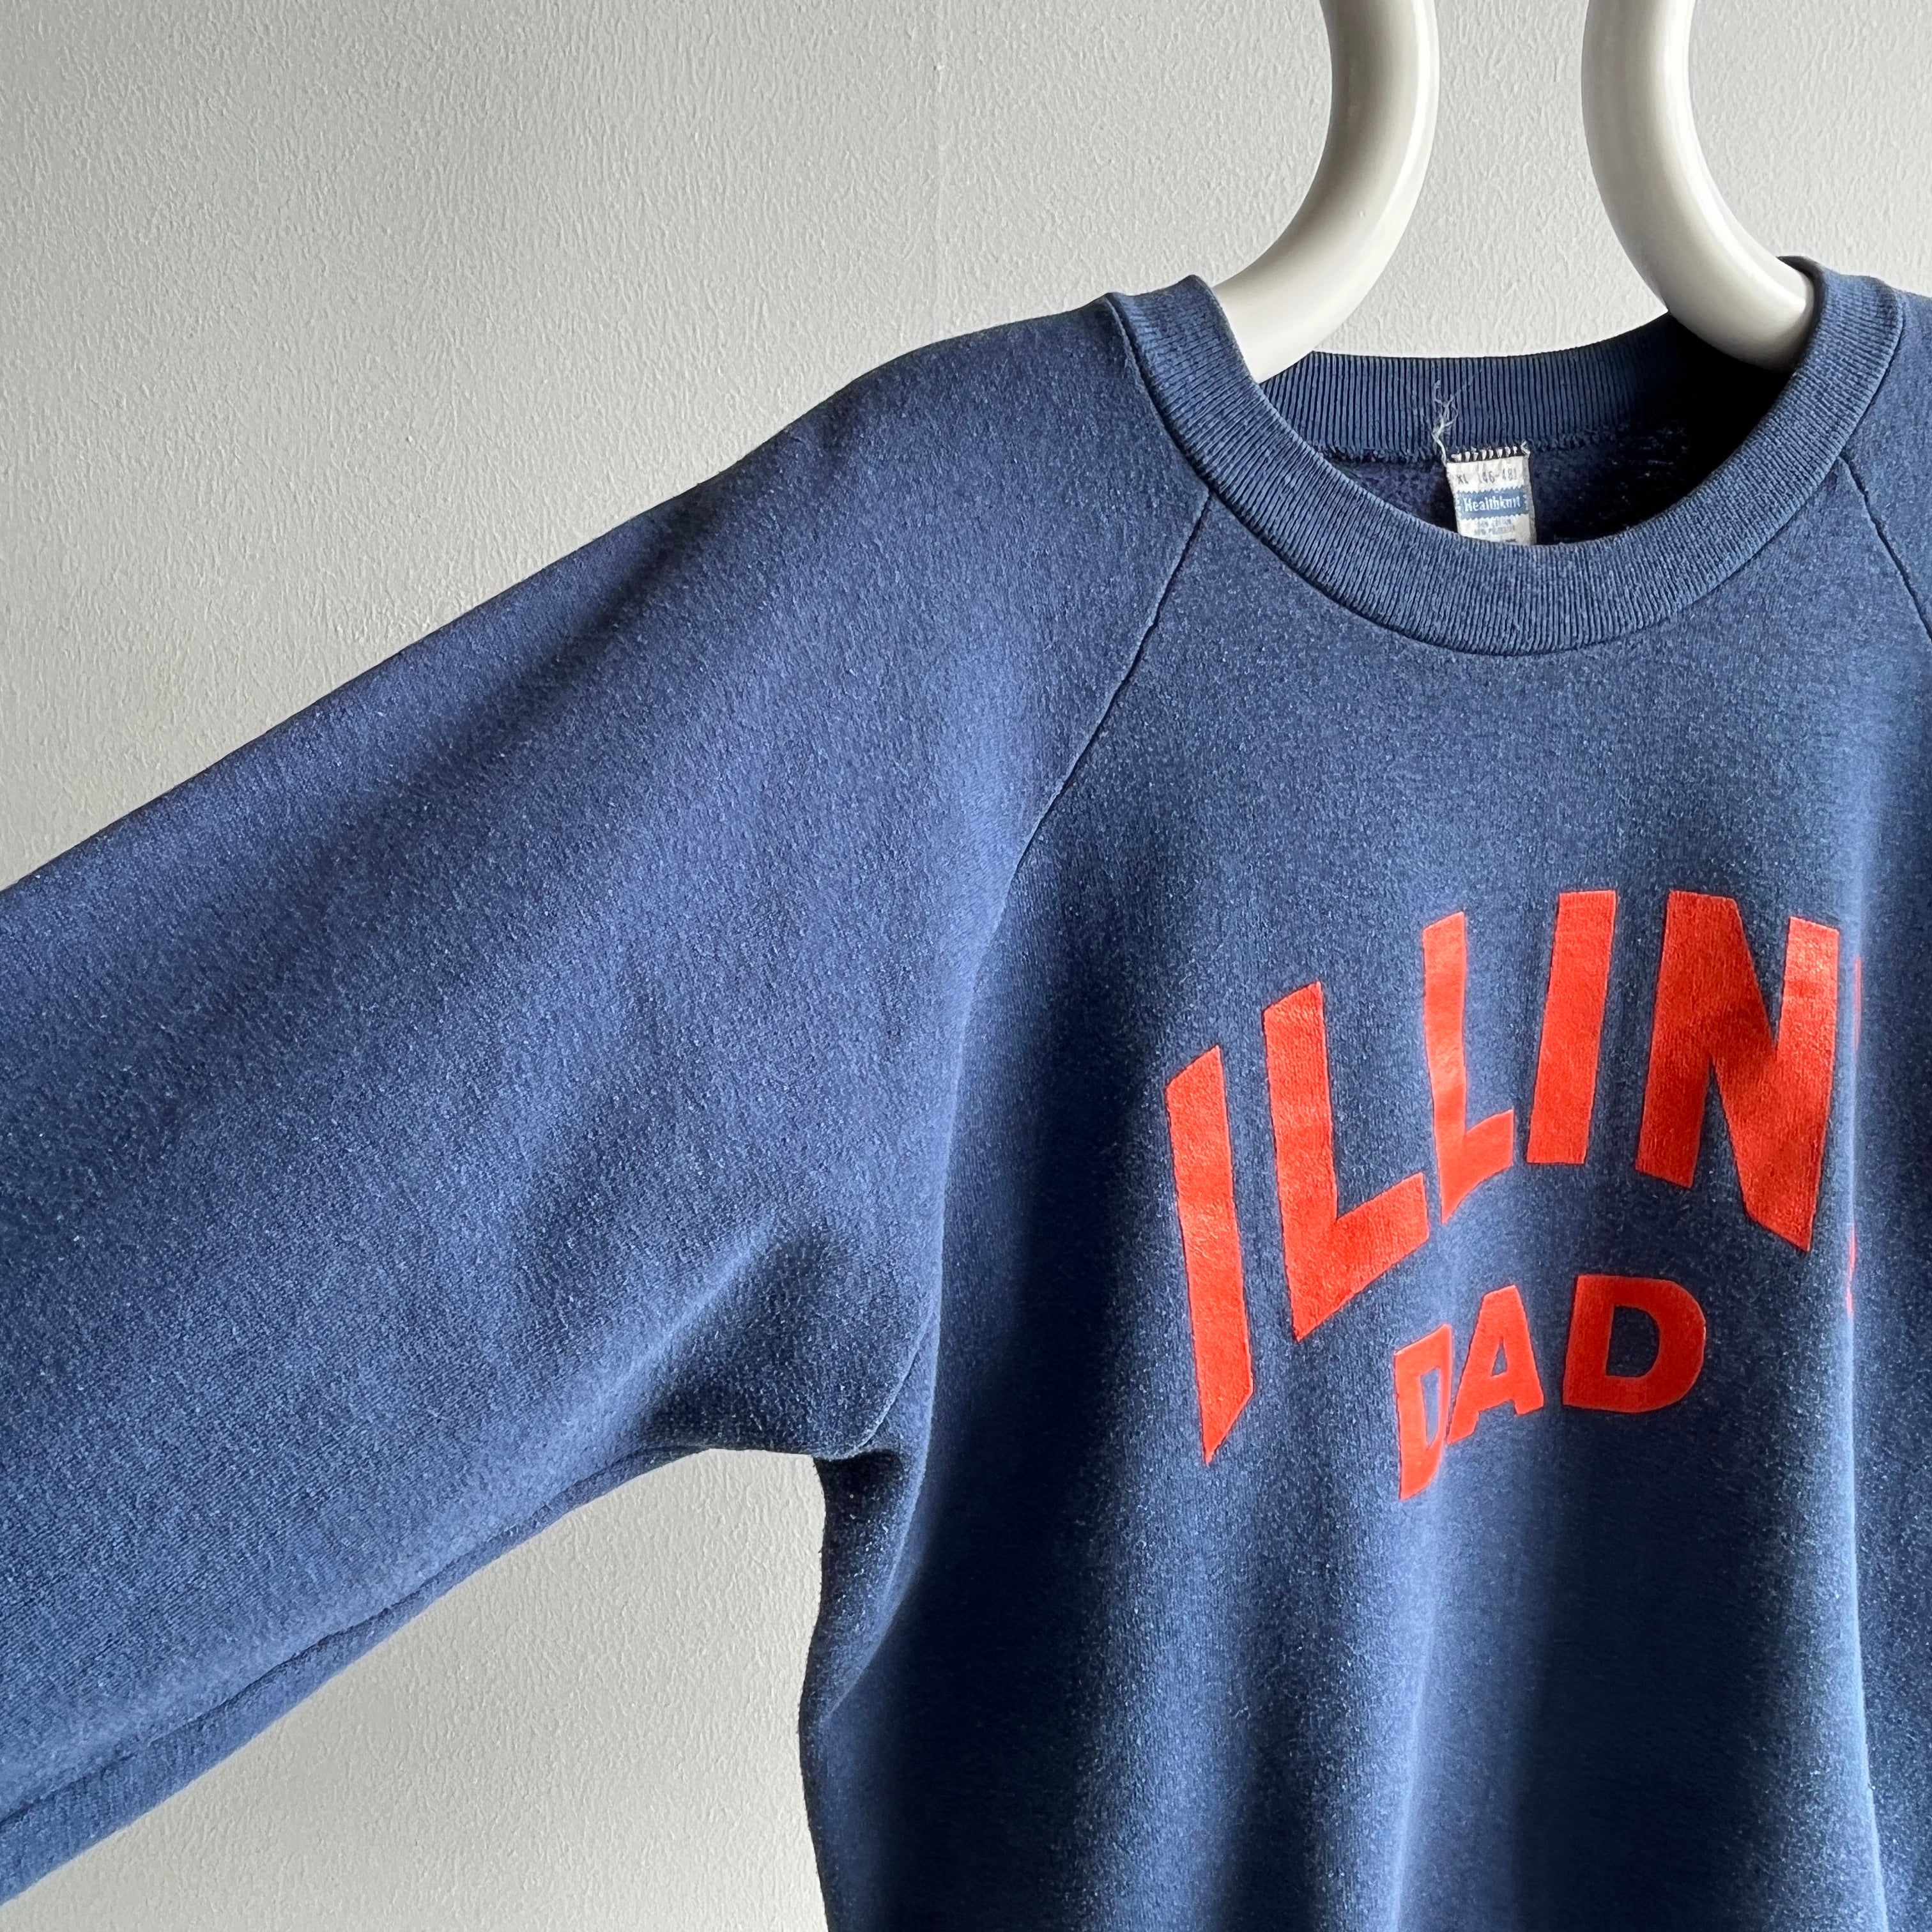 1980s Illini Dad Rad Sweatshirt by Healthknit